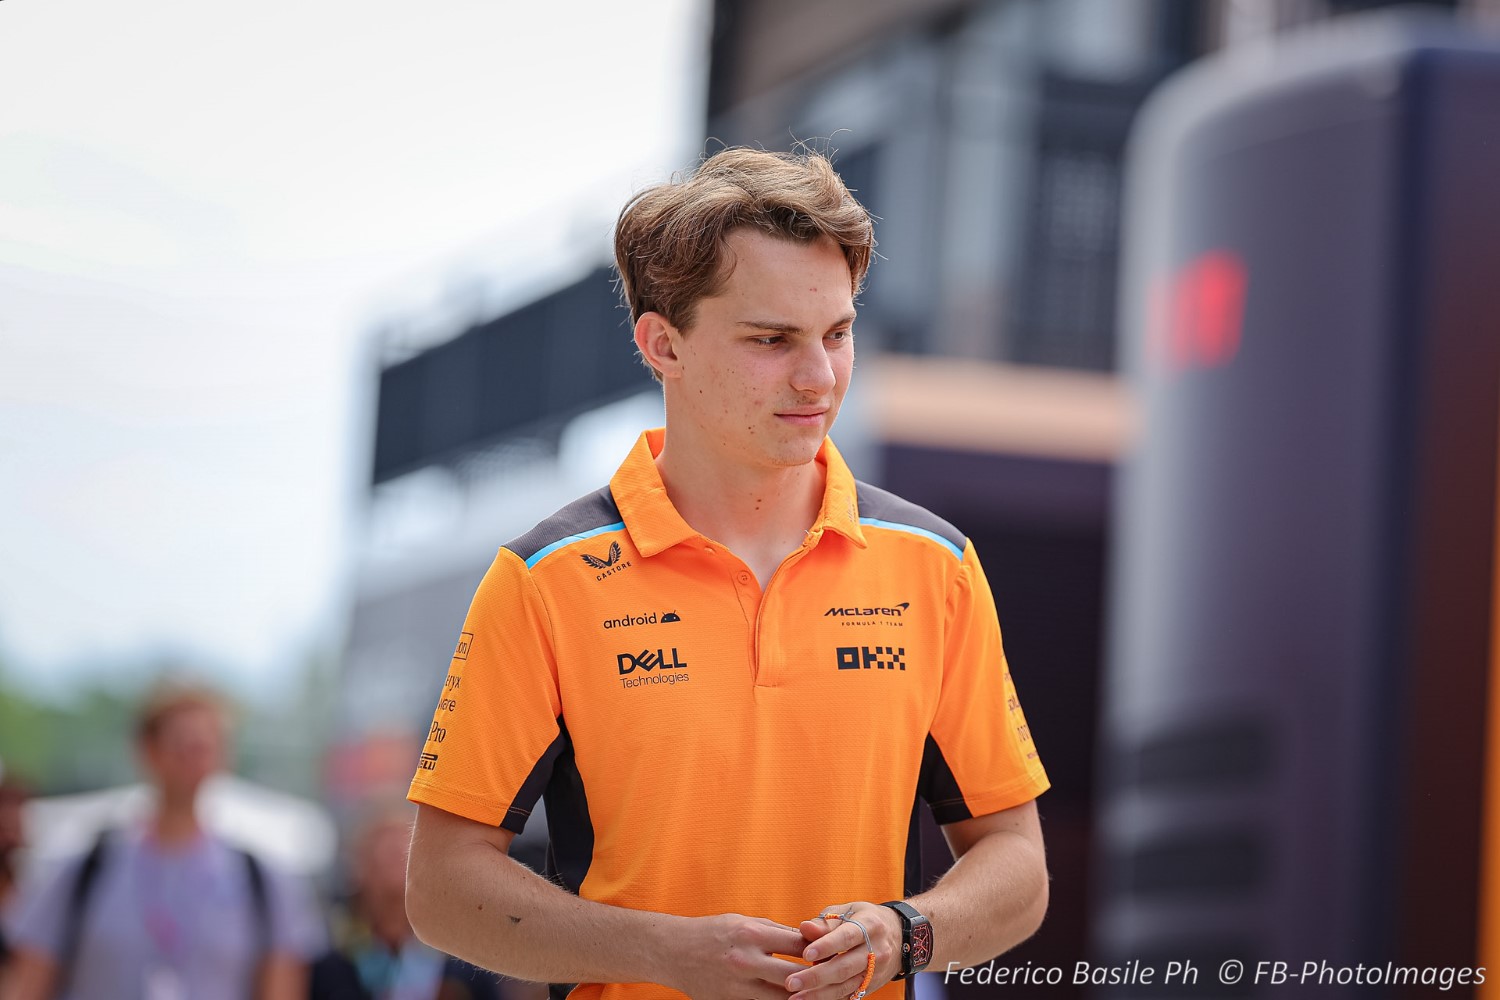 #81 Oscar Piastri, (AUS) McLaren Mercedes during the Hungarian GP, Budapest 20-23 July 2023 at the Hungaroring, Formula 1 World championship 2023.